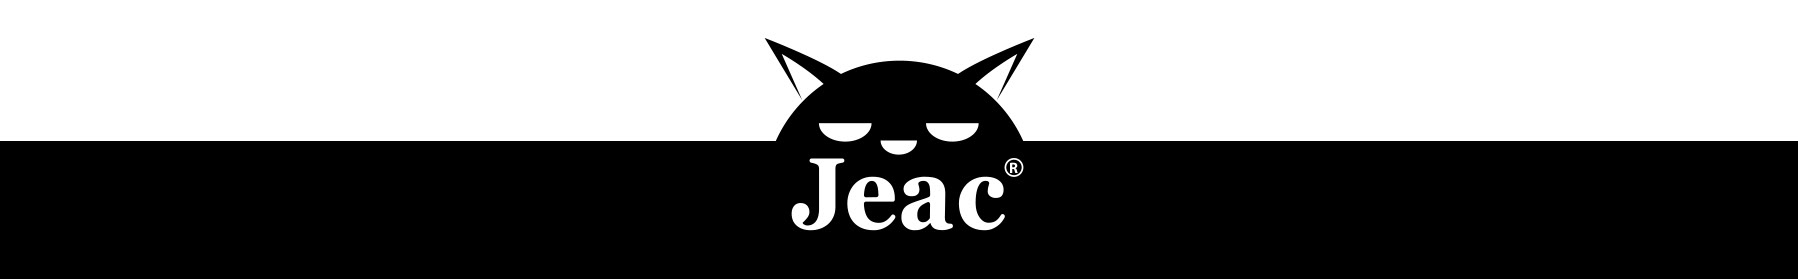 JEAC NEW profil başlığı